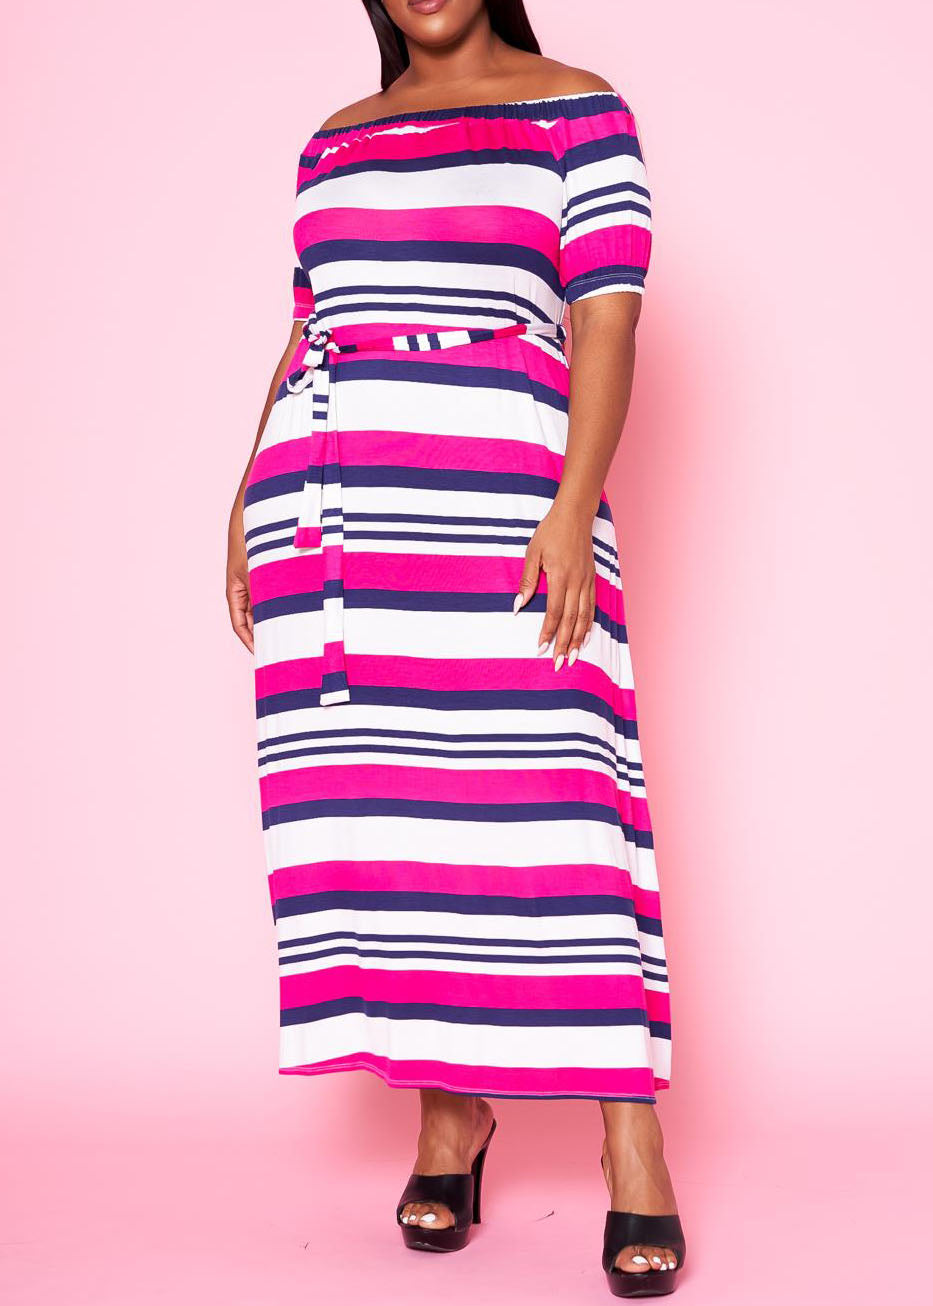 HI Curvy Plus Size Women Off Shoulder Multi Striped Flare Maxi Dress